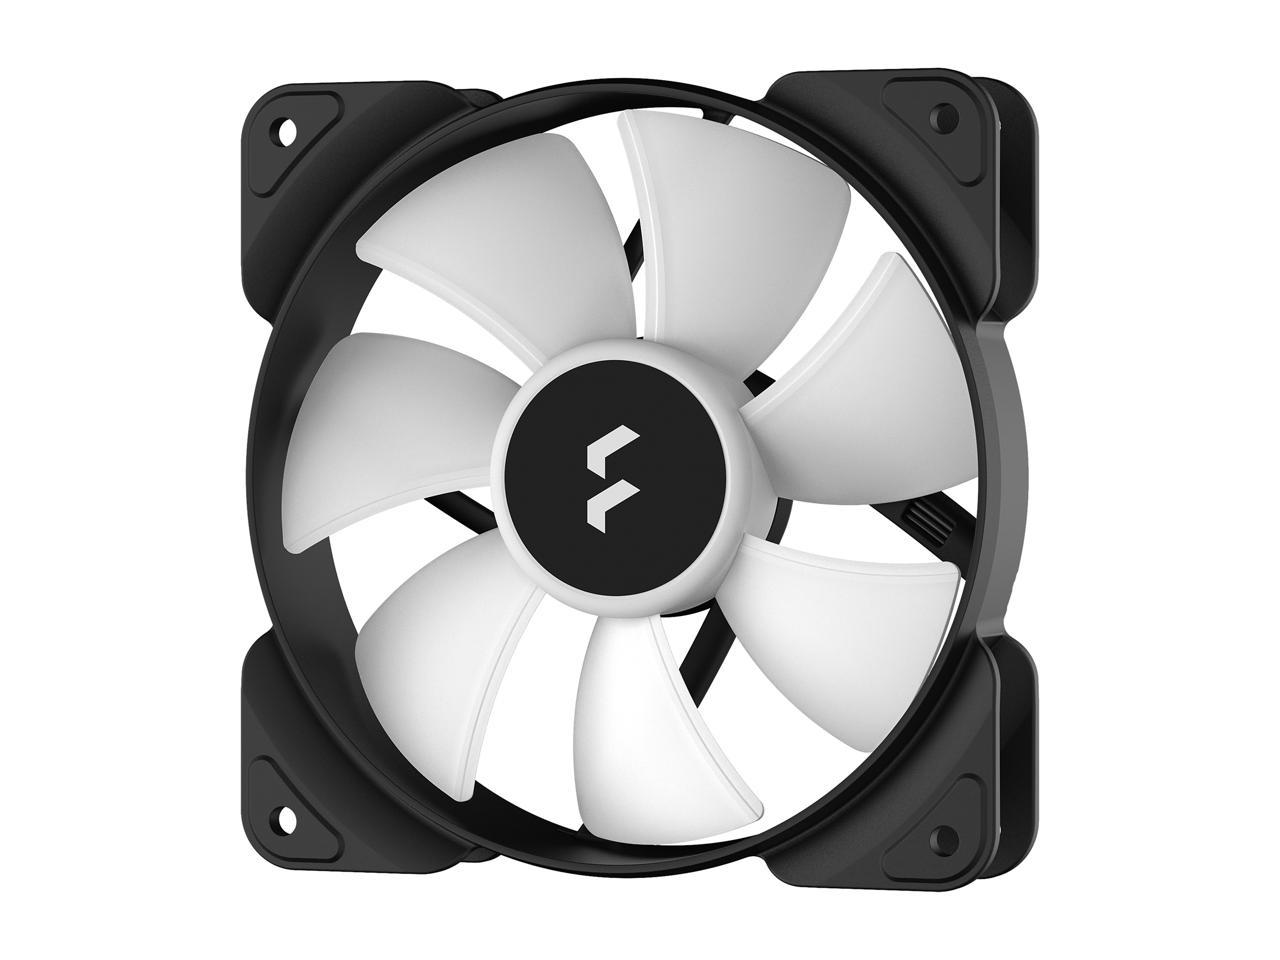 Fractal Design Aspect 12 Fd-F-As1-1206 Rgb 120Mm 1200Rpm Black Frame 3-Pack Computer Case Fan